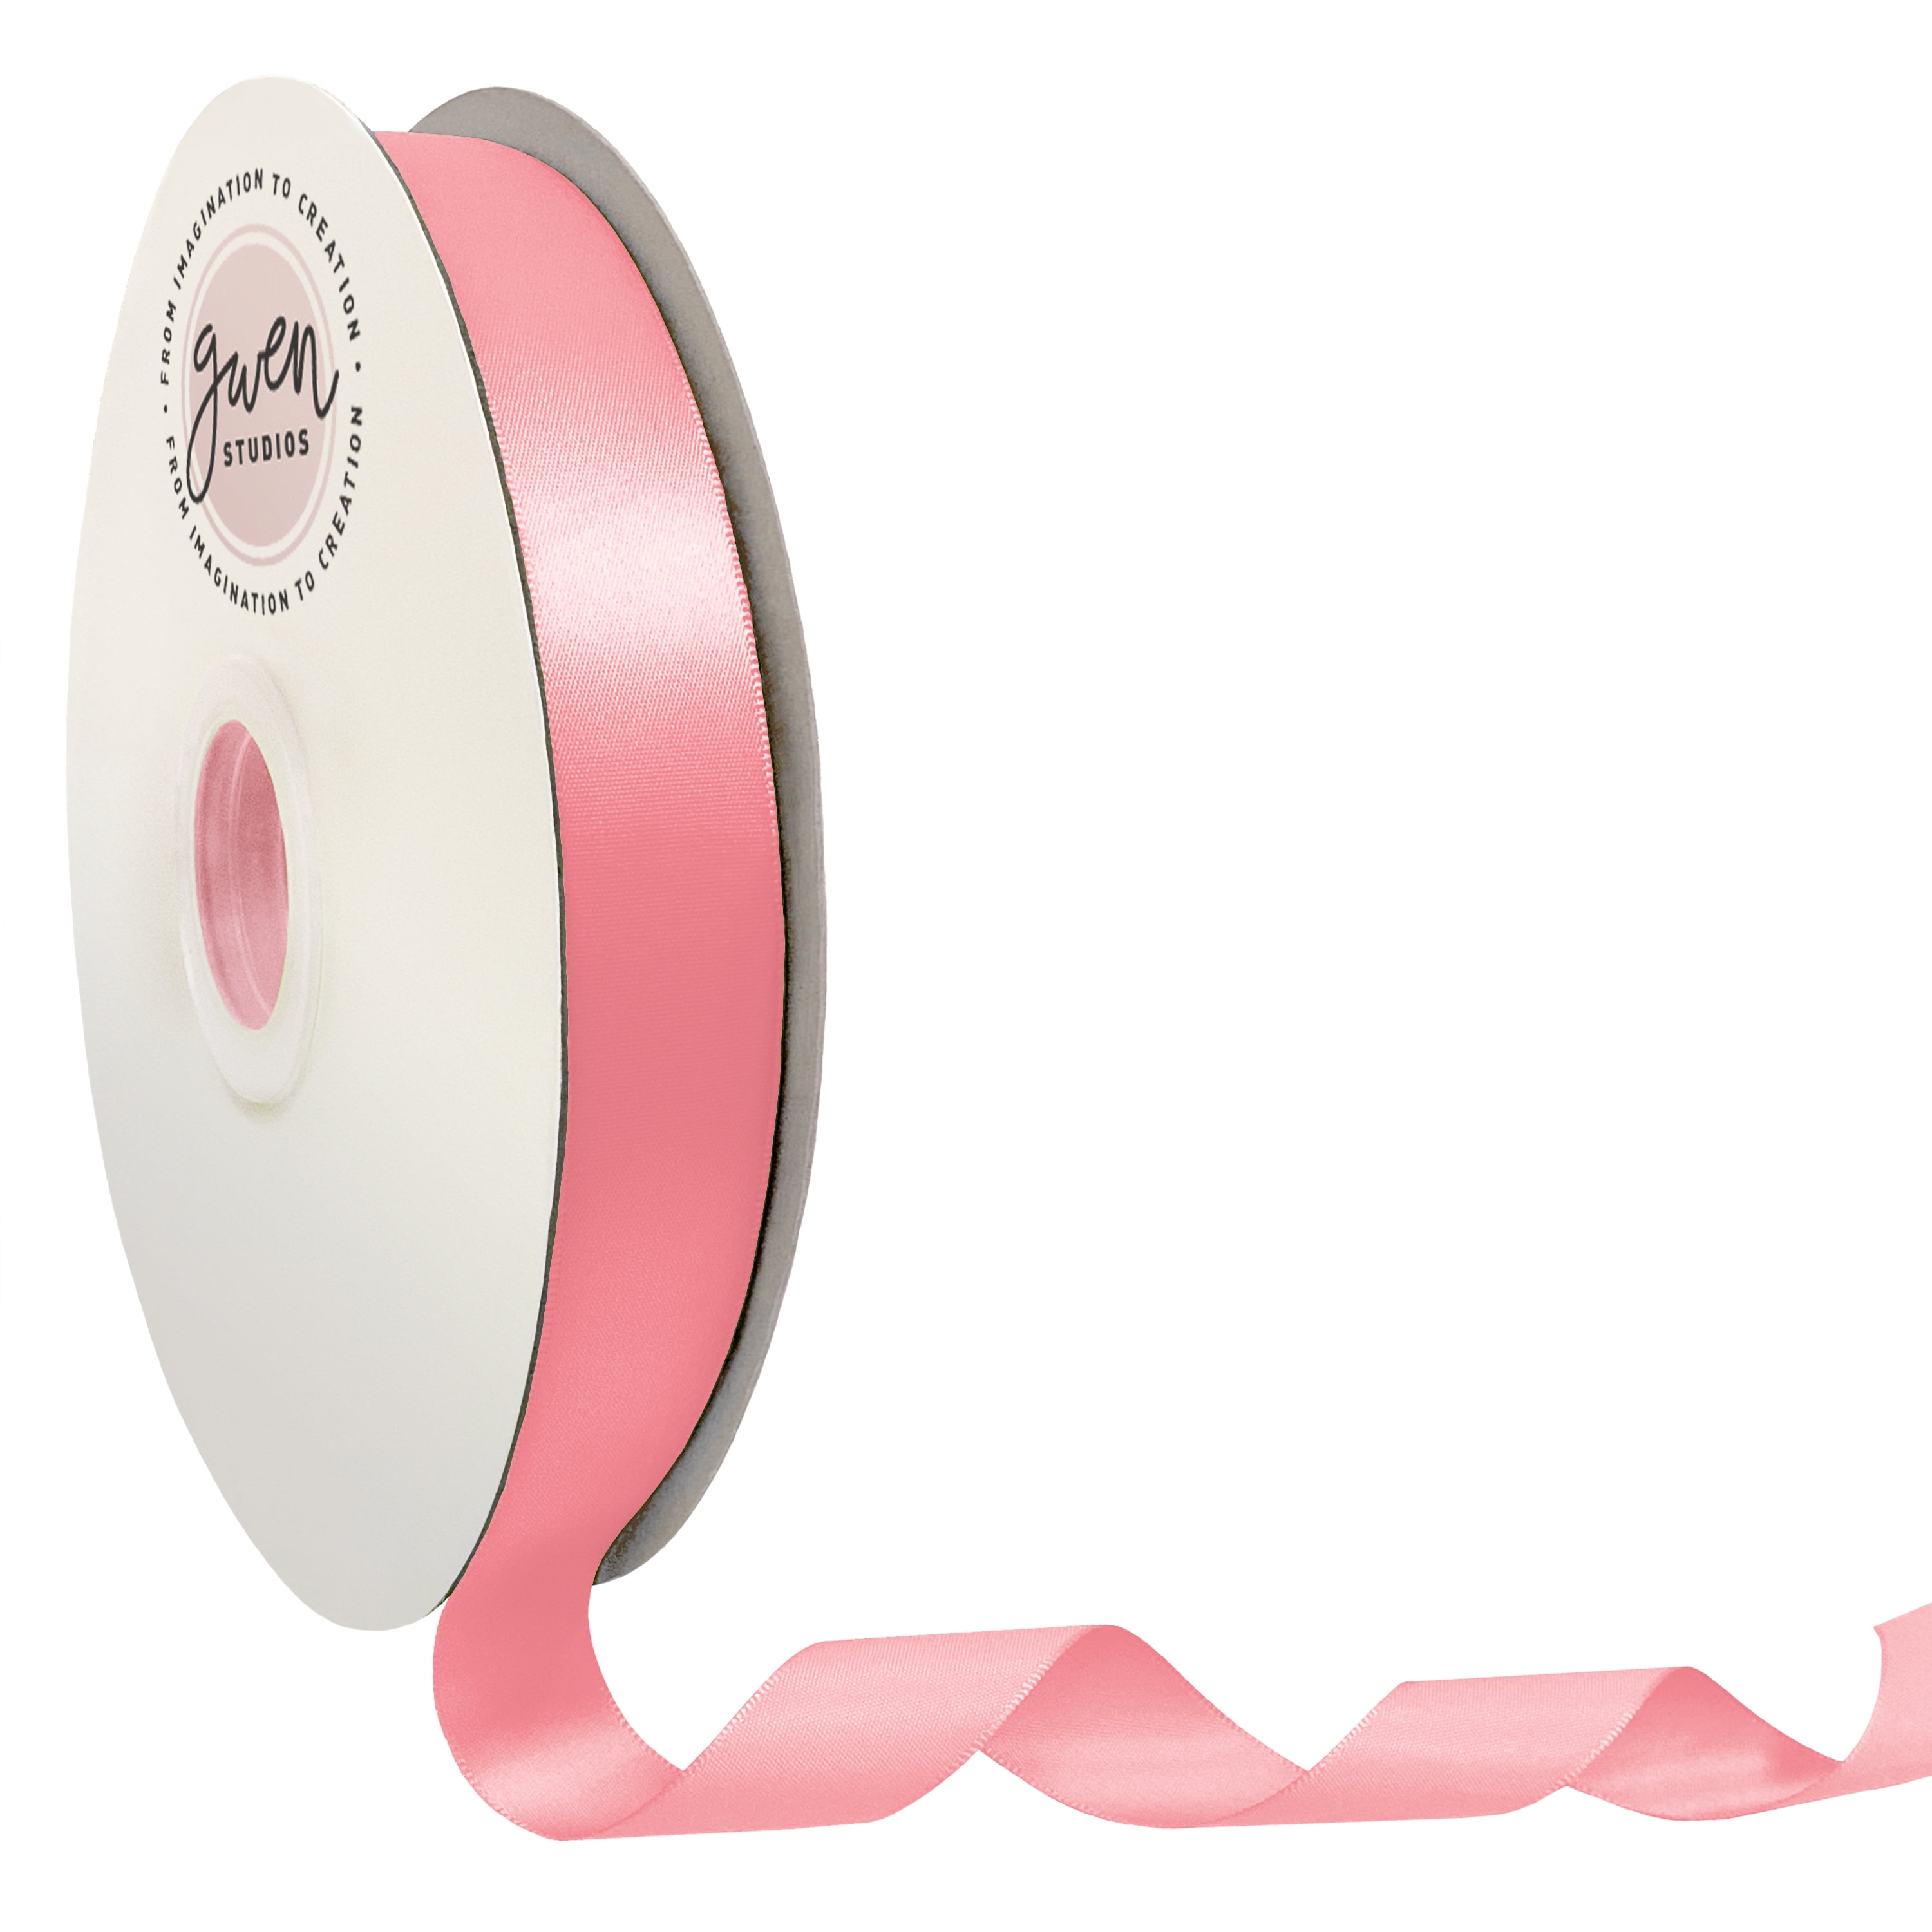 Love word block ribbon on 7/8 light pink single face satin